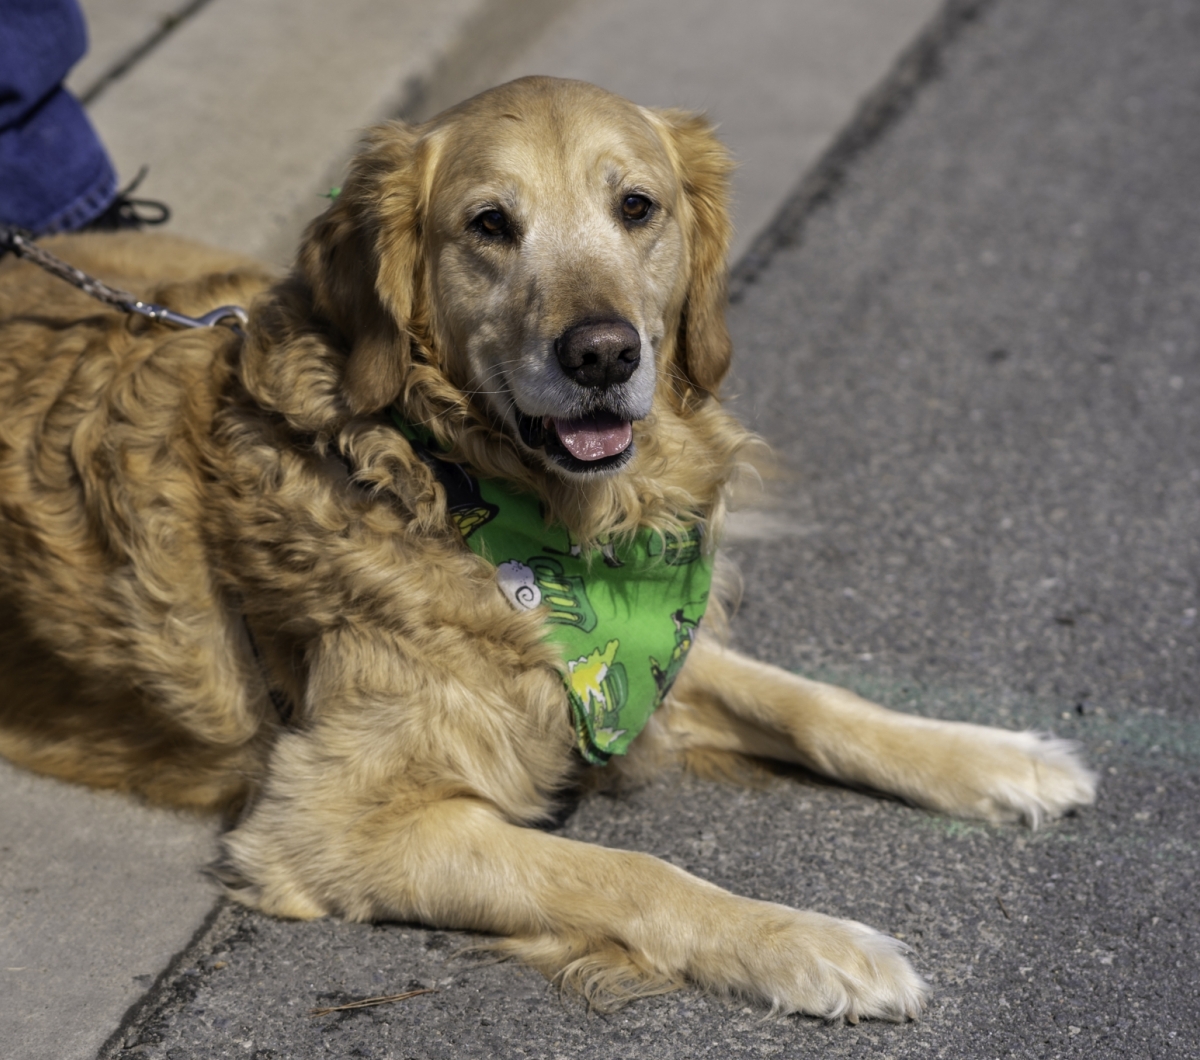 Golden dog with a green bandana